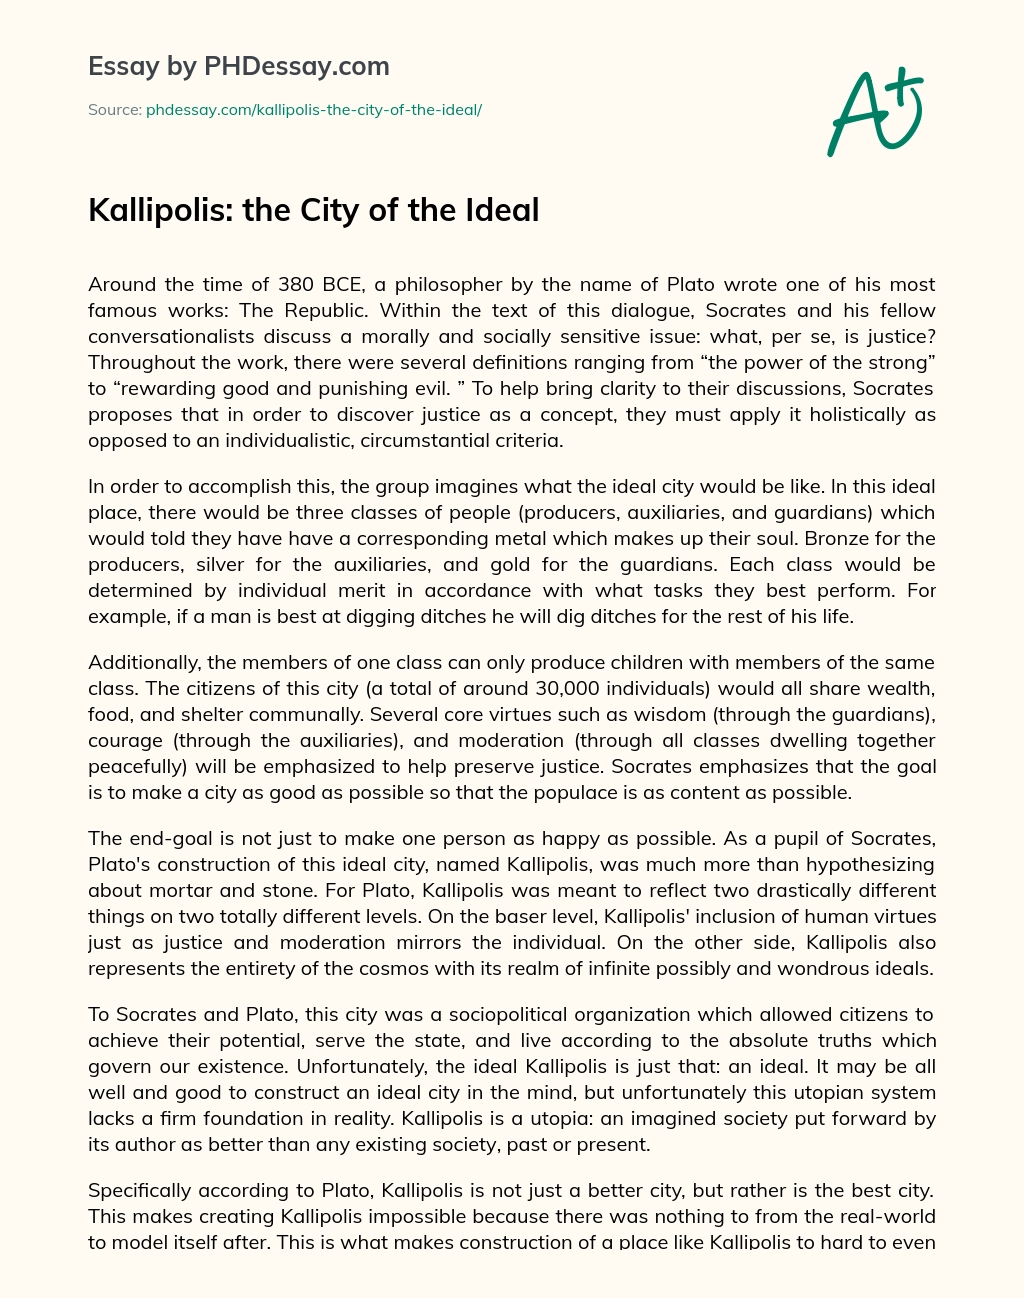 Kallipolis: the City of the Ideal essay